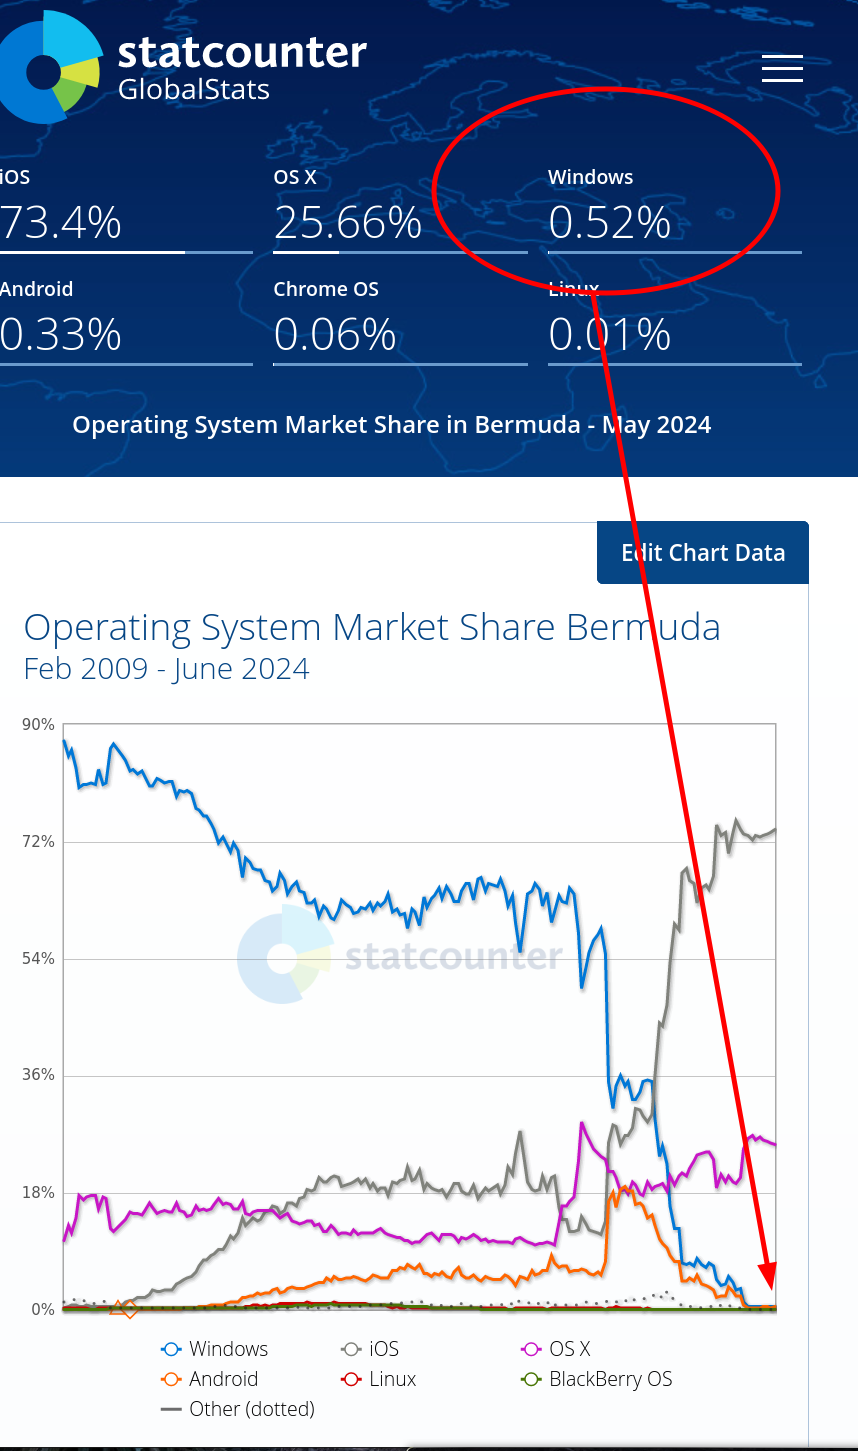 Operating System Market Share Bermuda: Feb 2009 - June 2024